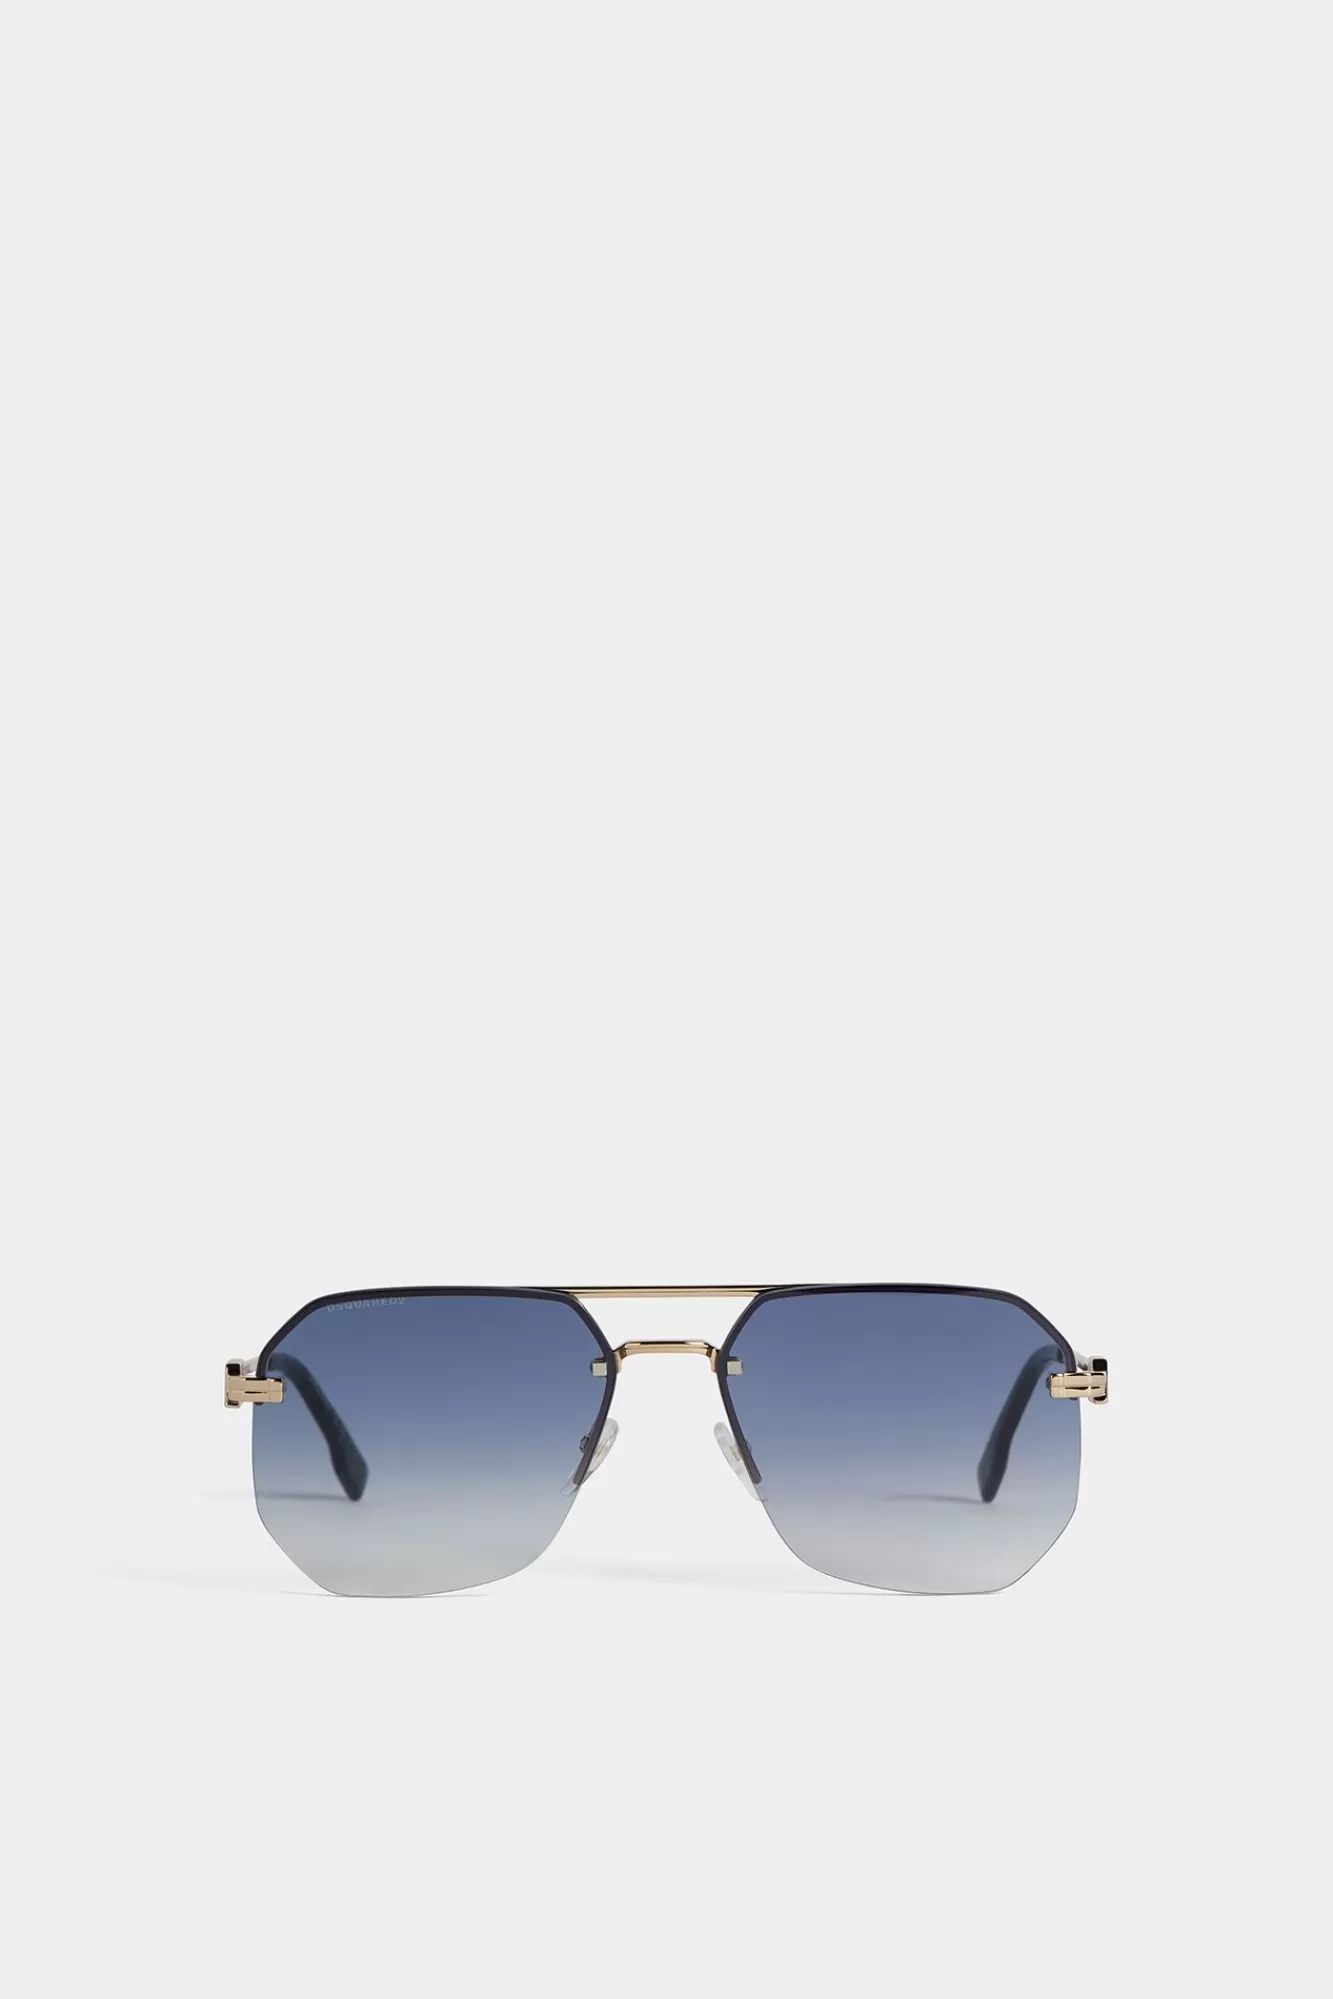 Hype Gold Sunglasses<Dsquared2 Flash Sale